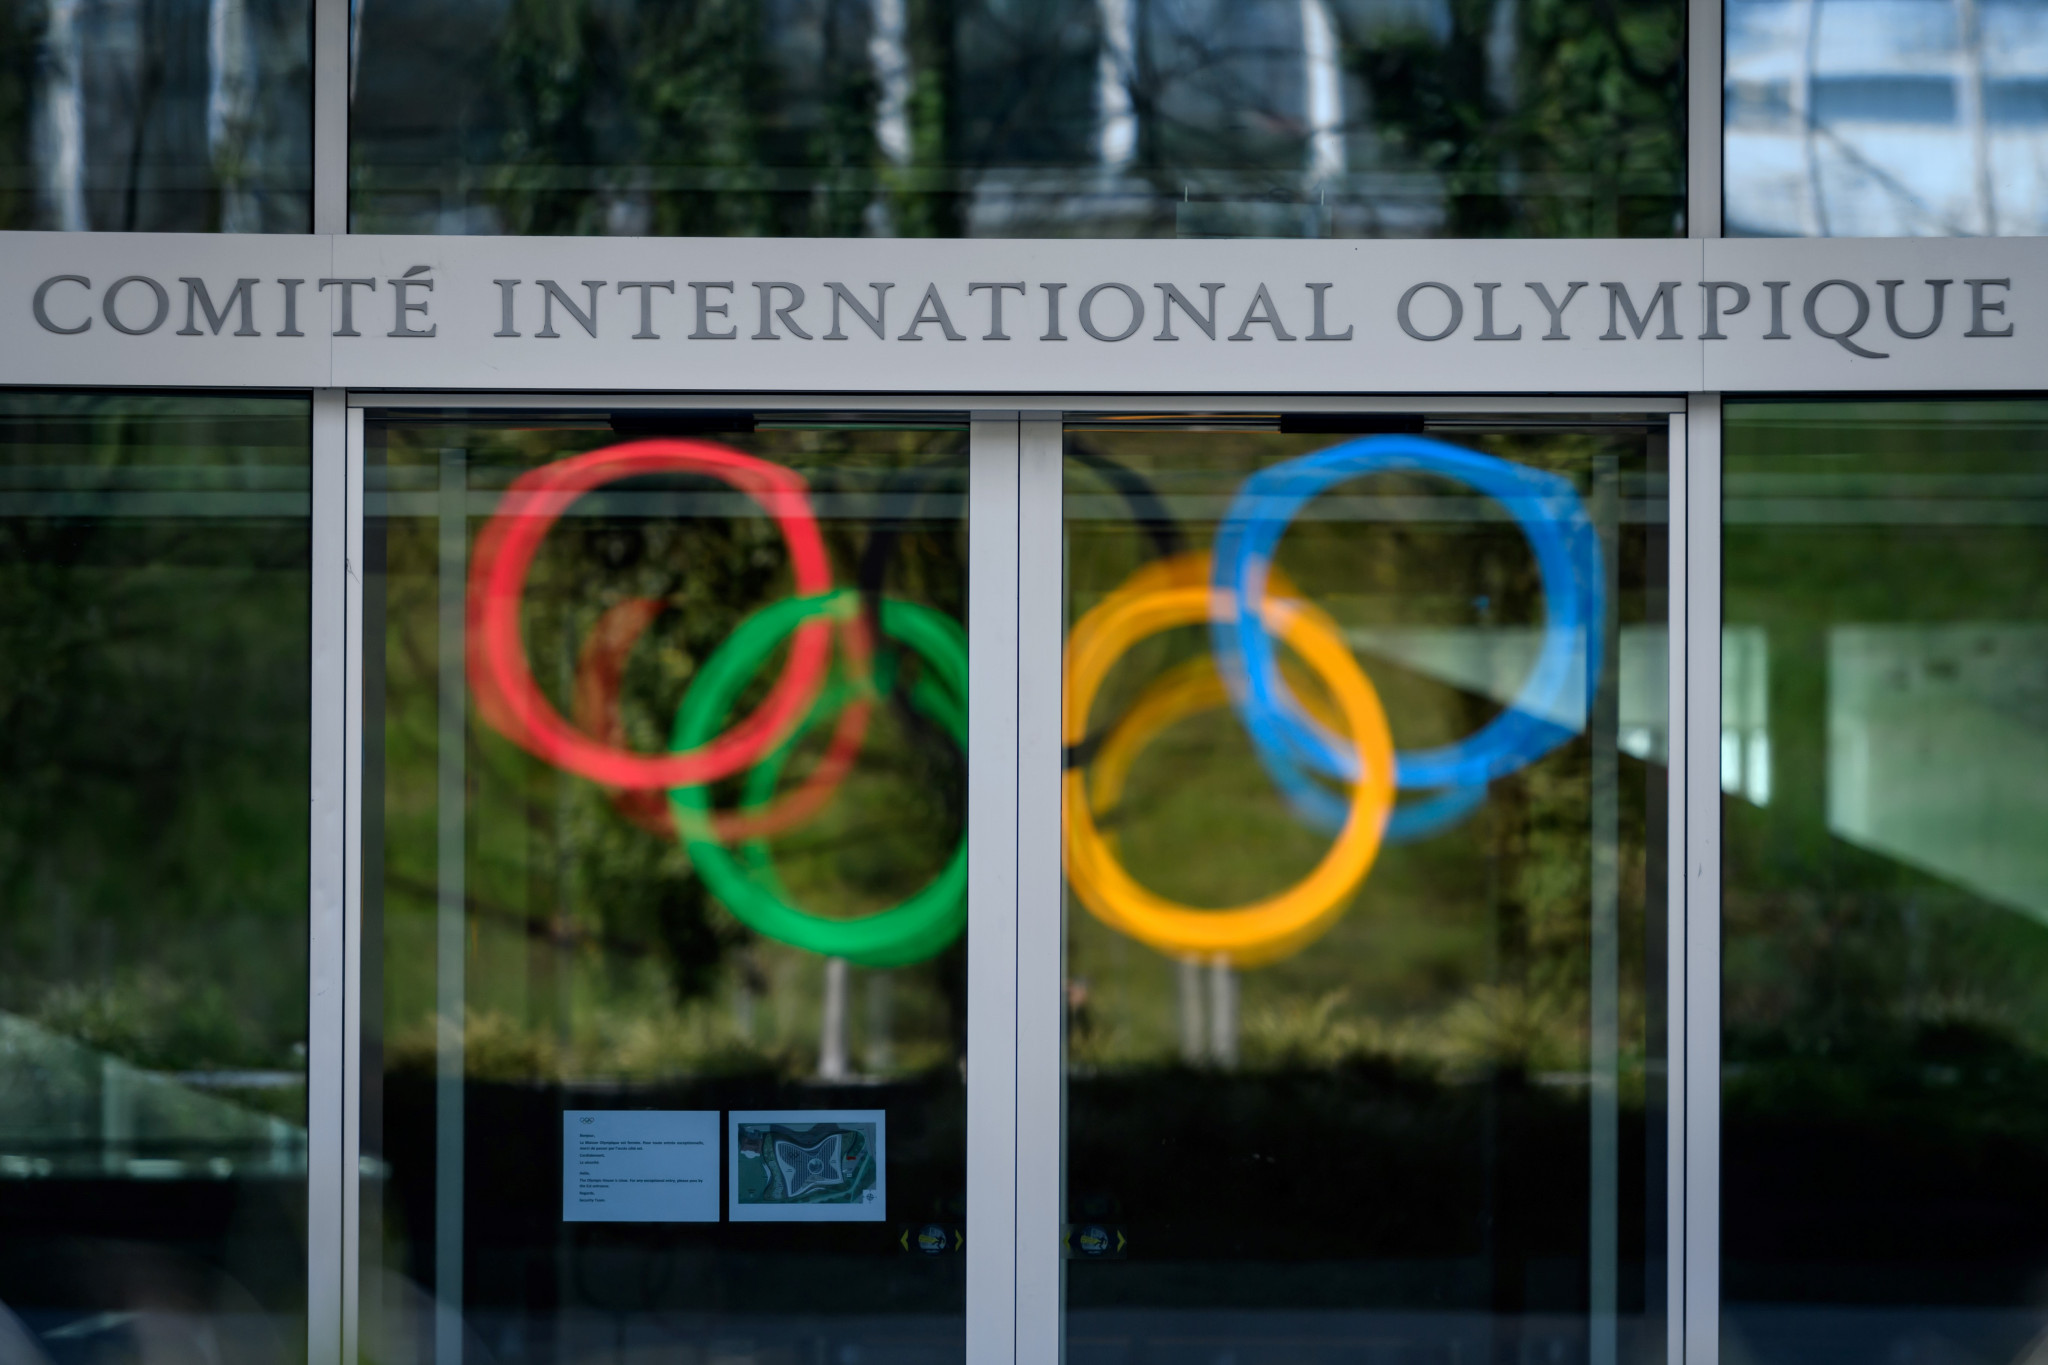 Continental bodies reiterate support for IOC during coronavirus crisis